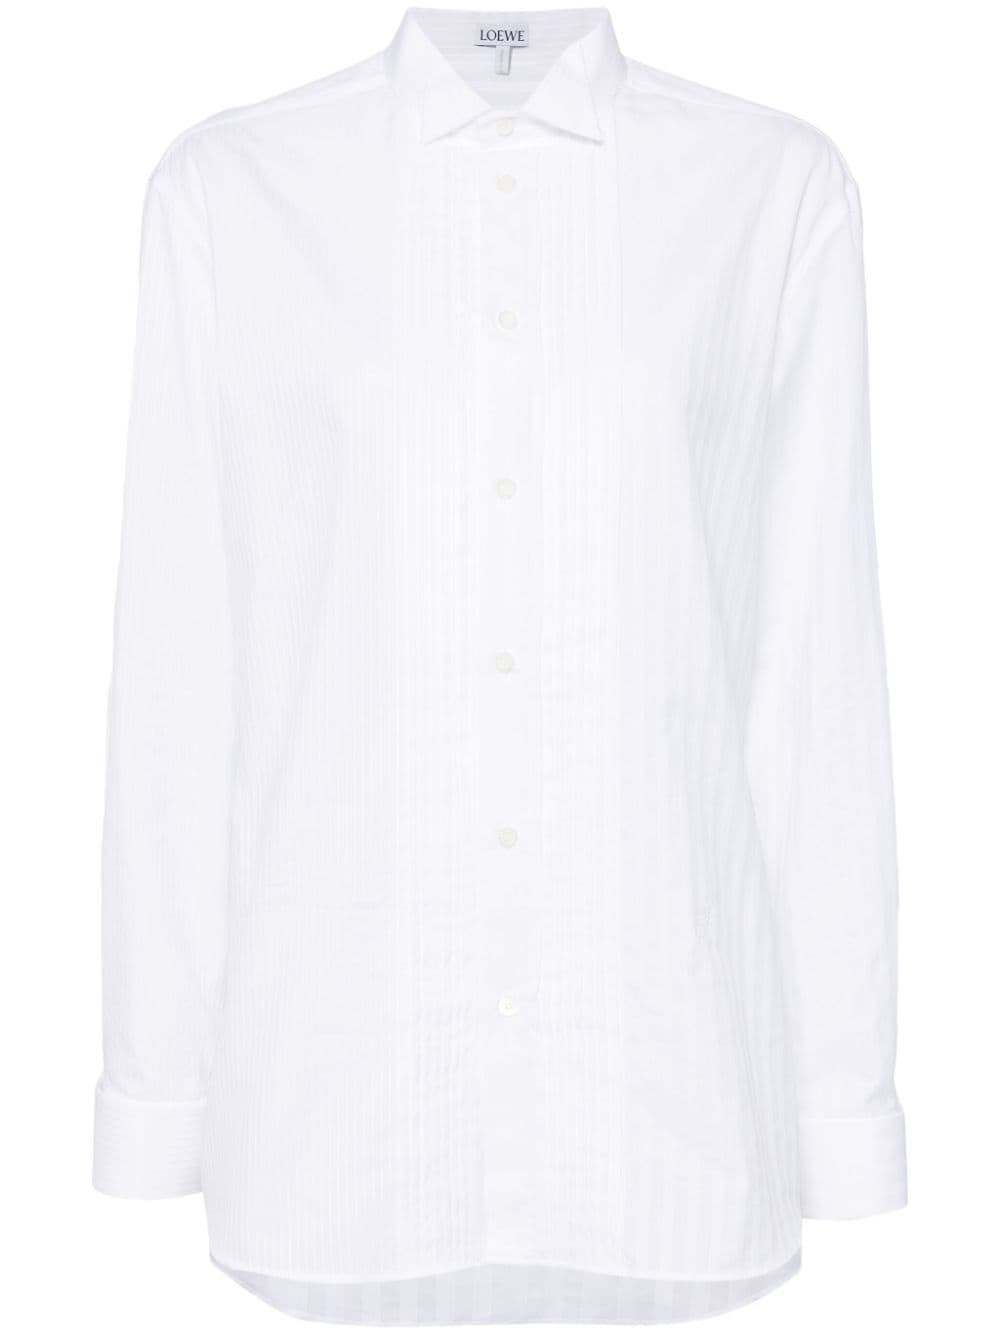 LOEWE striped cotton shirt - White von LOEWE